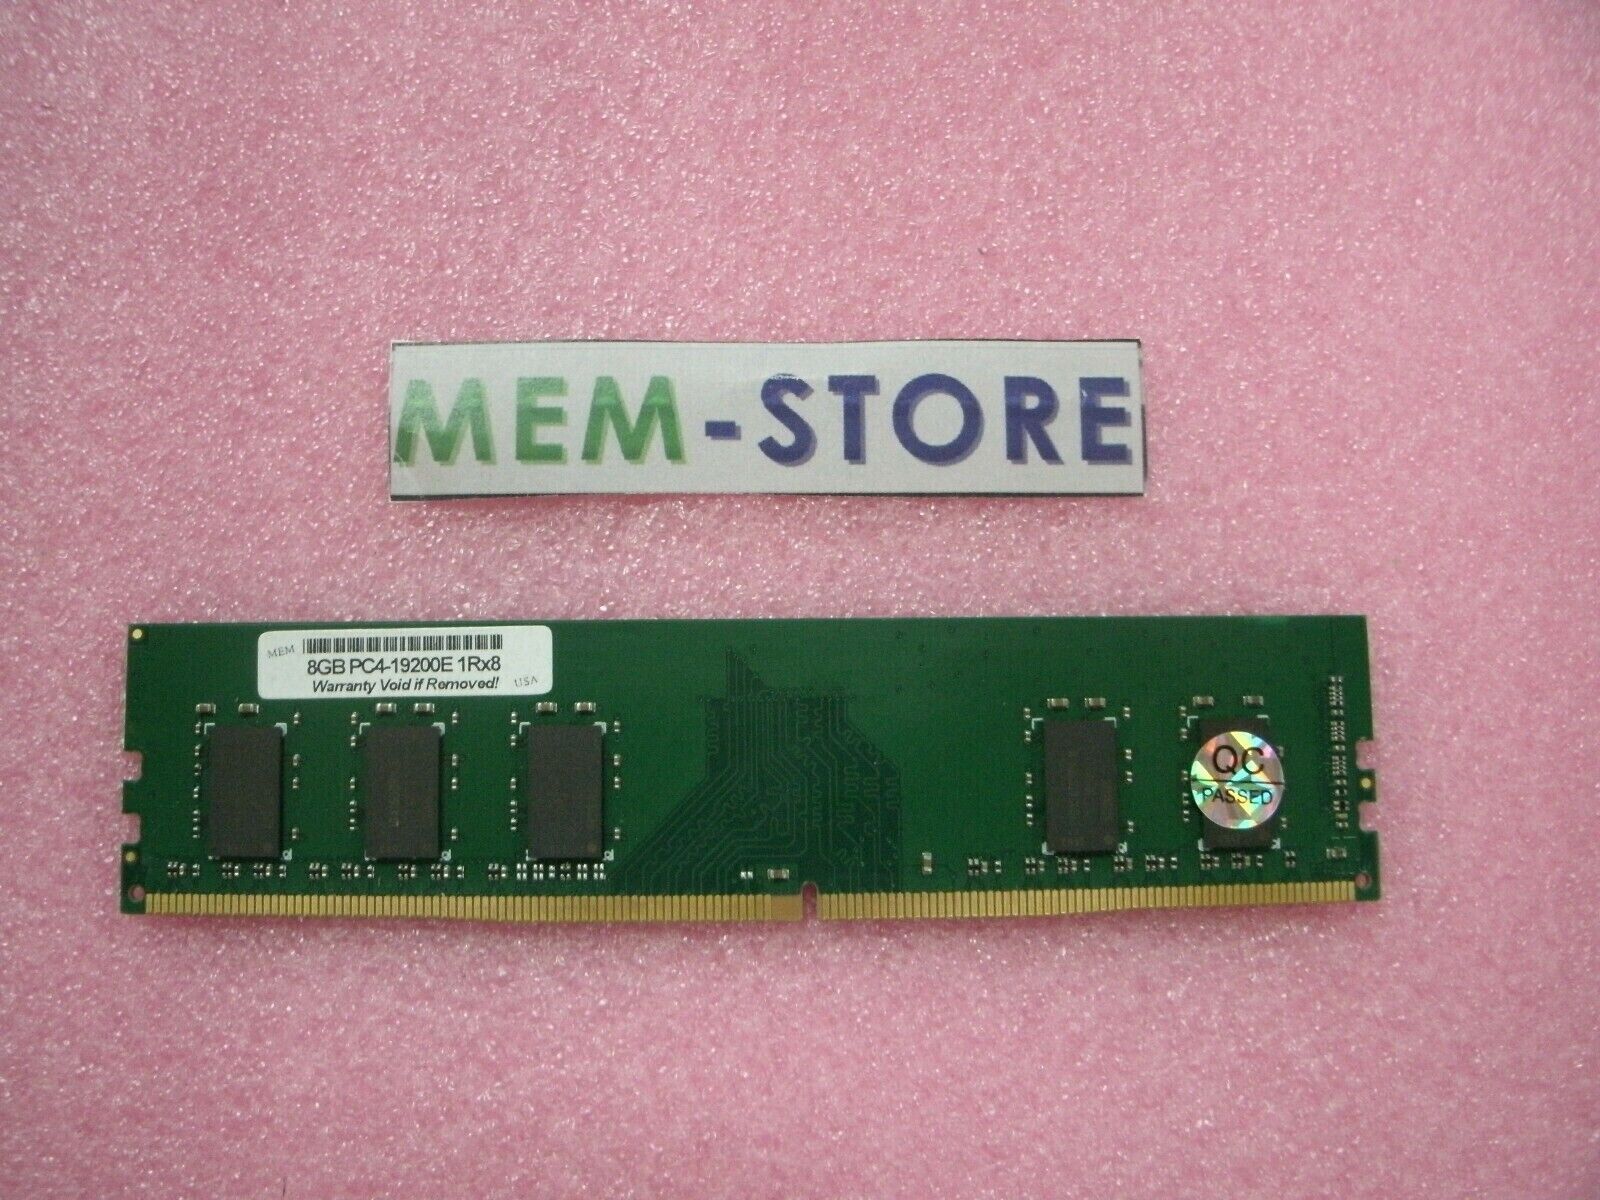 4X70P26062-MB 8GB DDR4 2400MHz ECC UDIMM RAM Memory Lenovo System x3250 M6 (3rd Party) - image 1 of 2